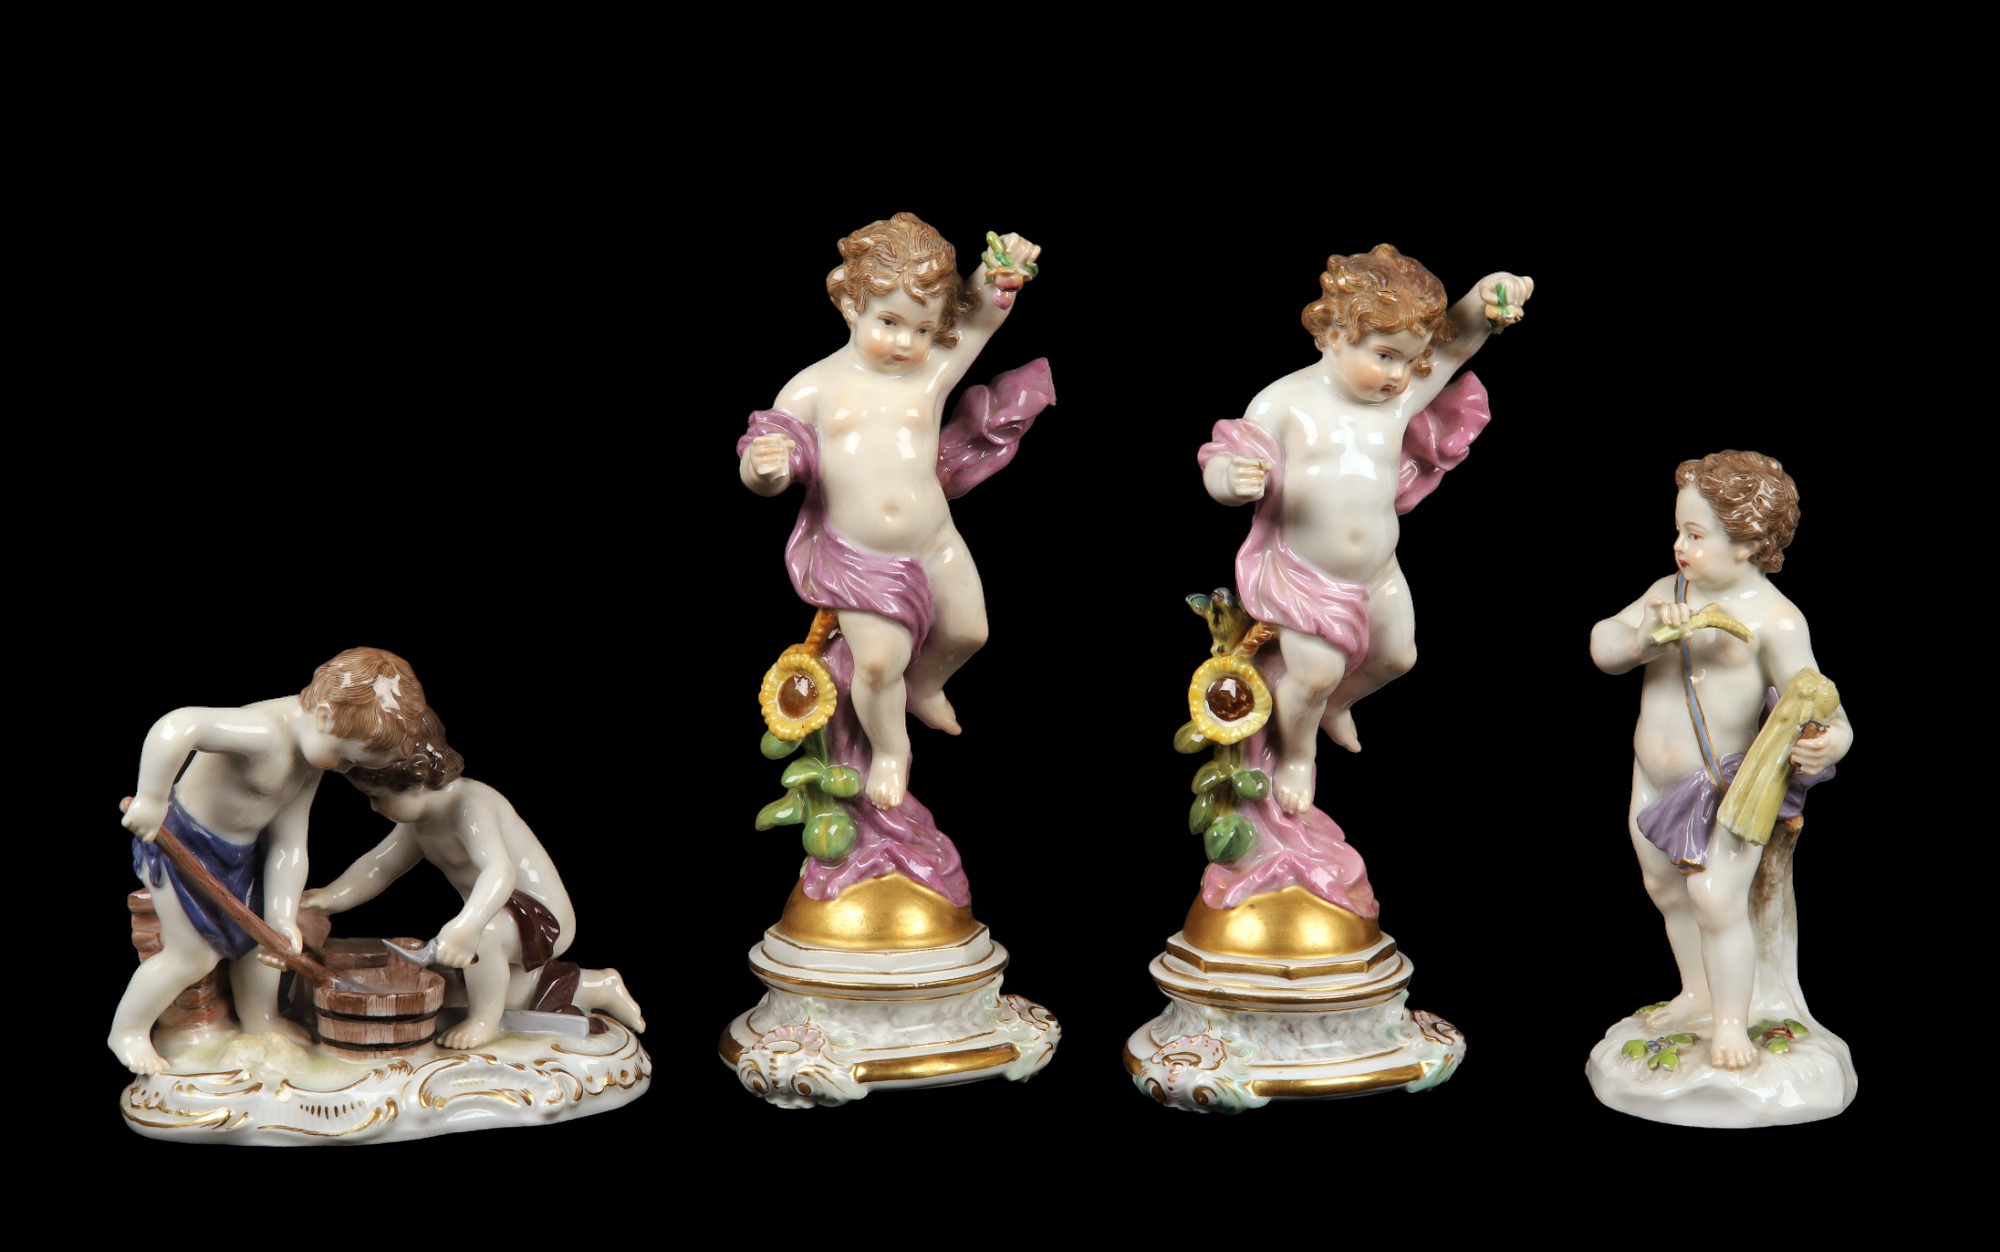  4 Meissen porcelain cherub figures  3ca471